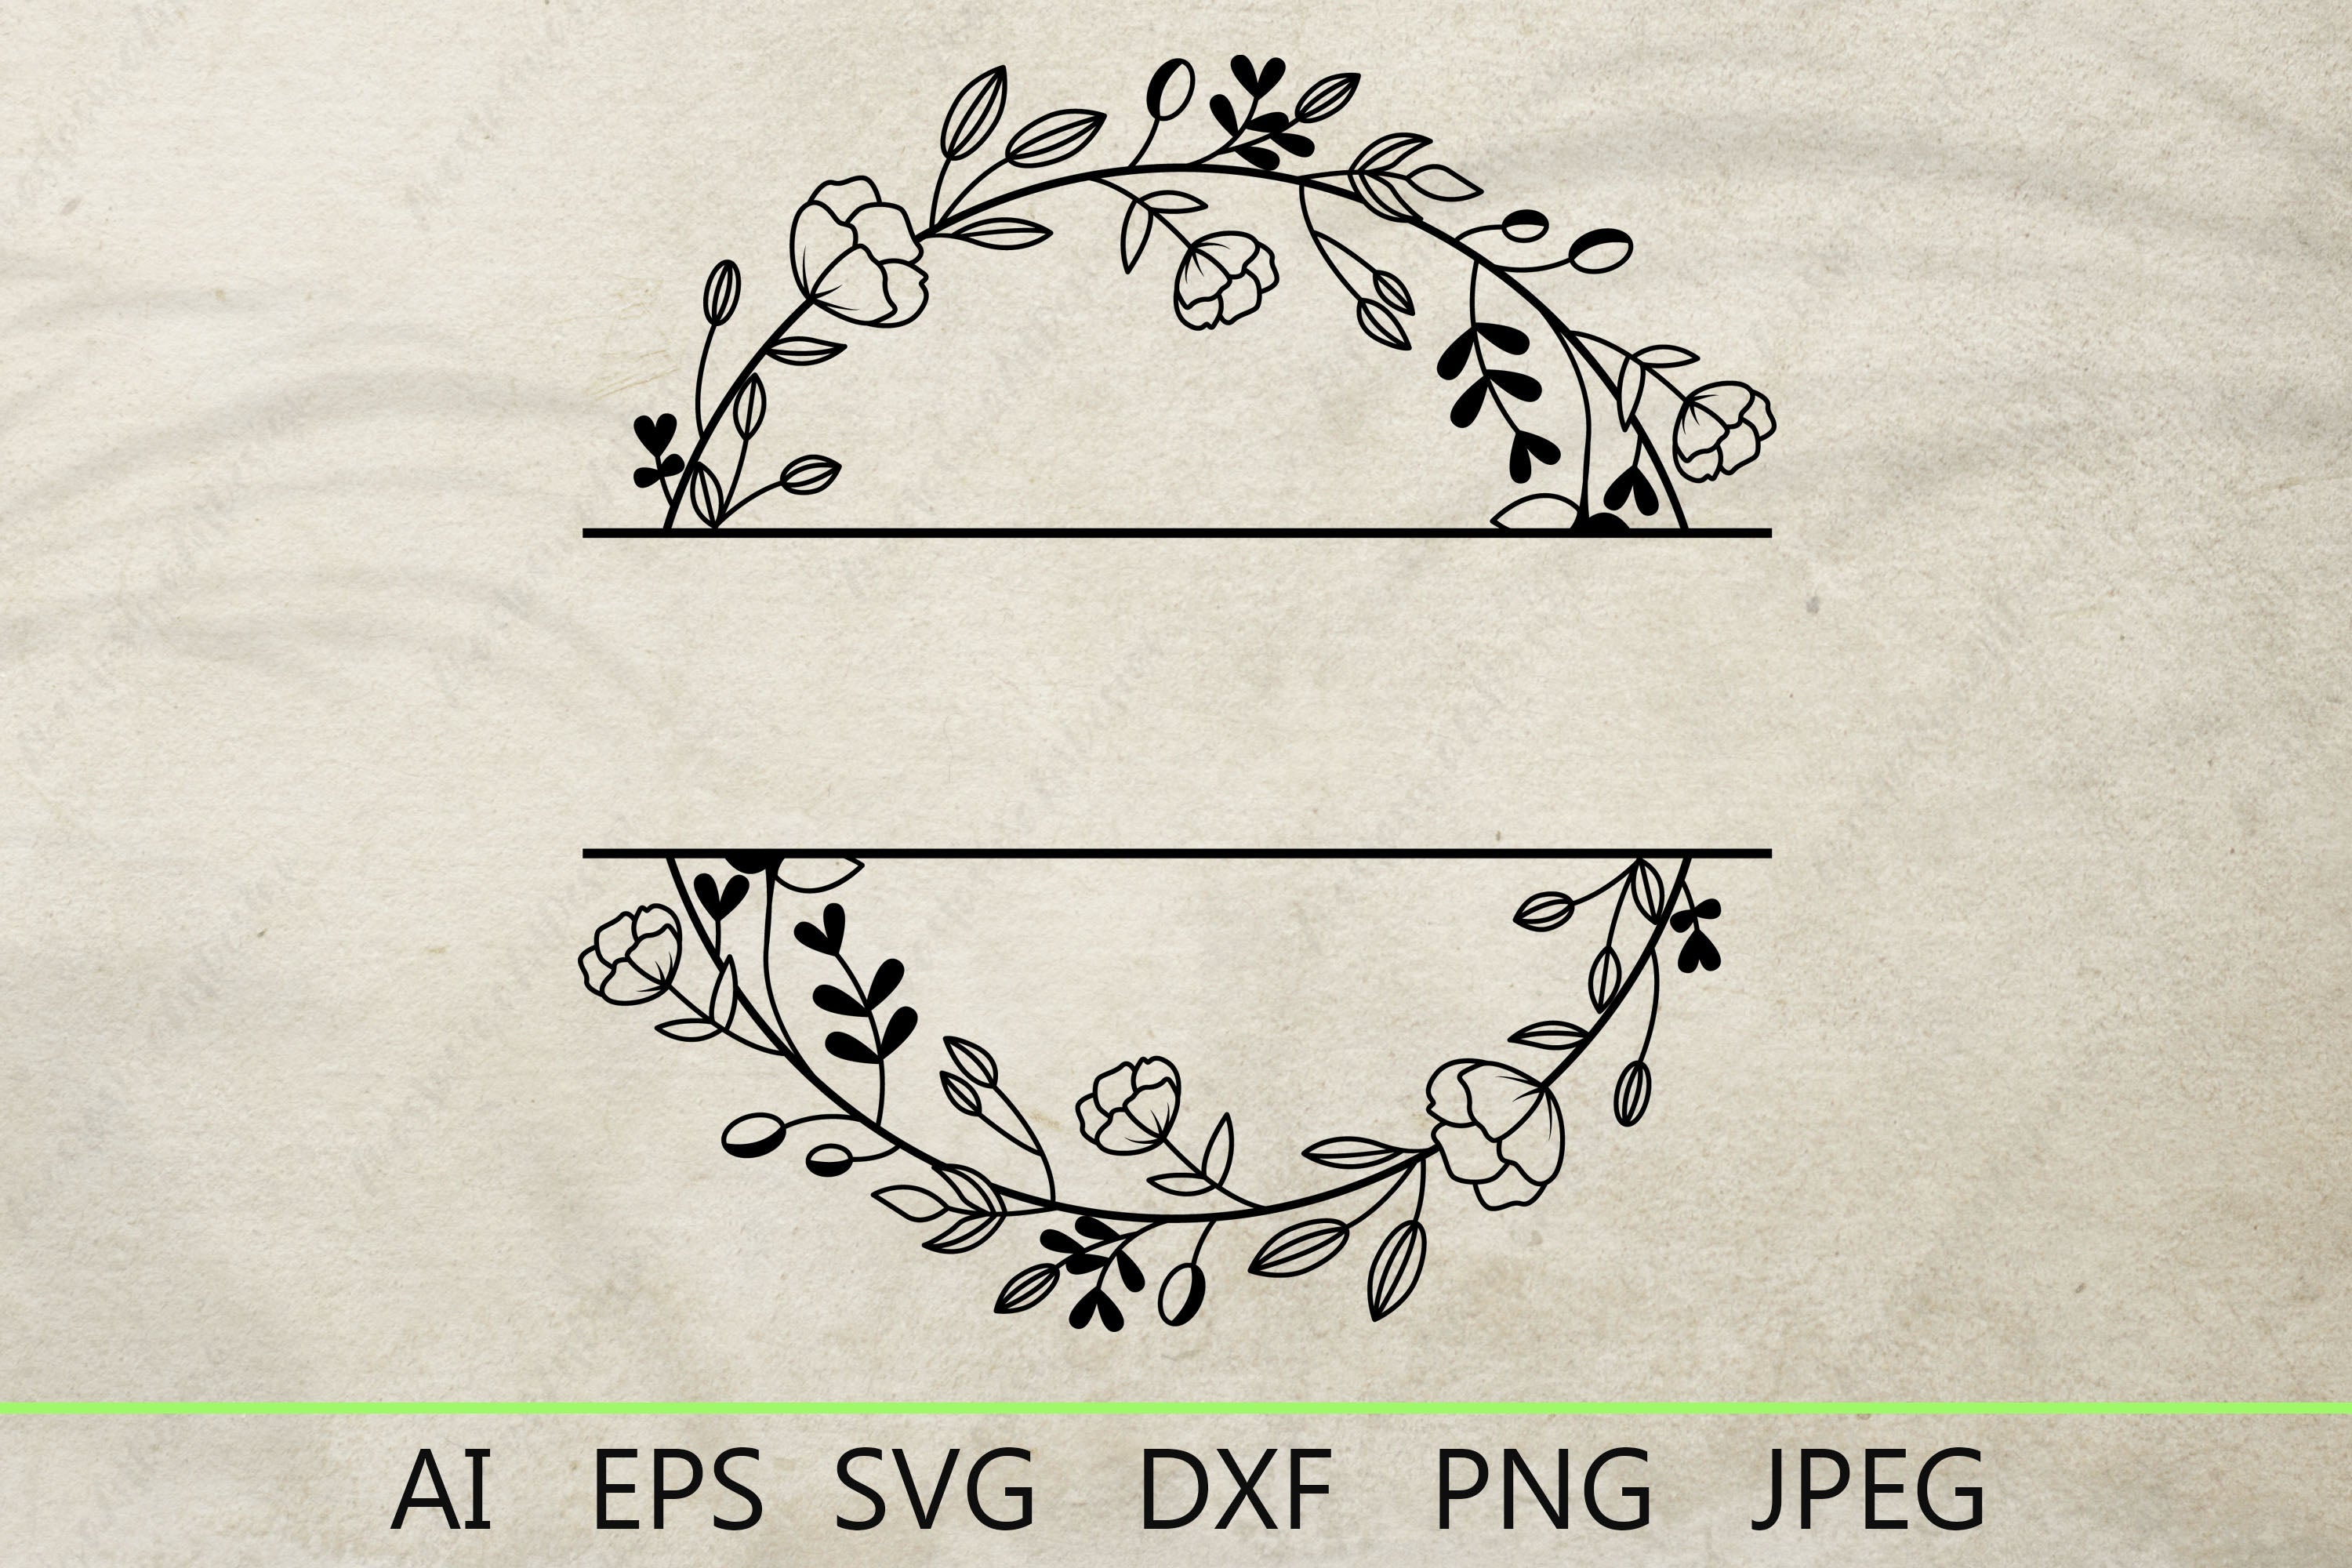 Floral split monogram svg, Flowers wreath svg, Family last name monogram -  So Fontsy